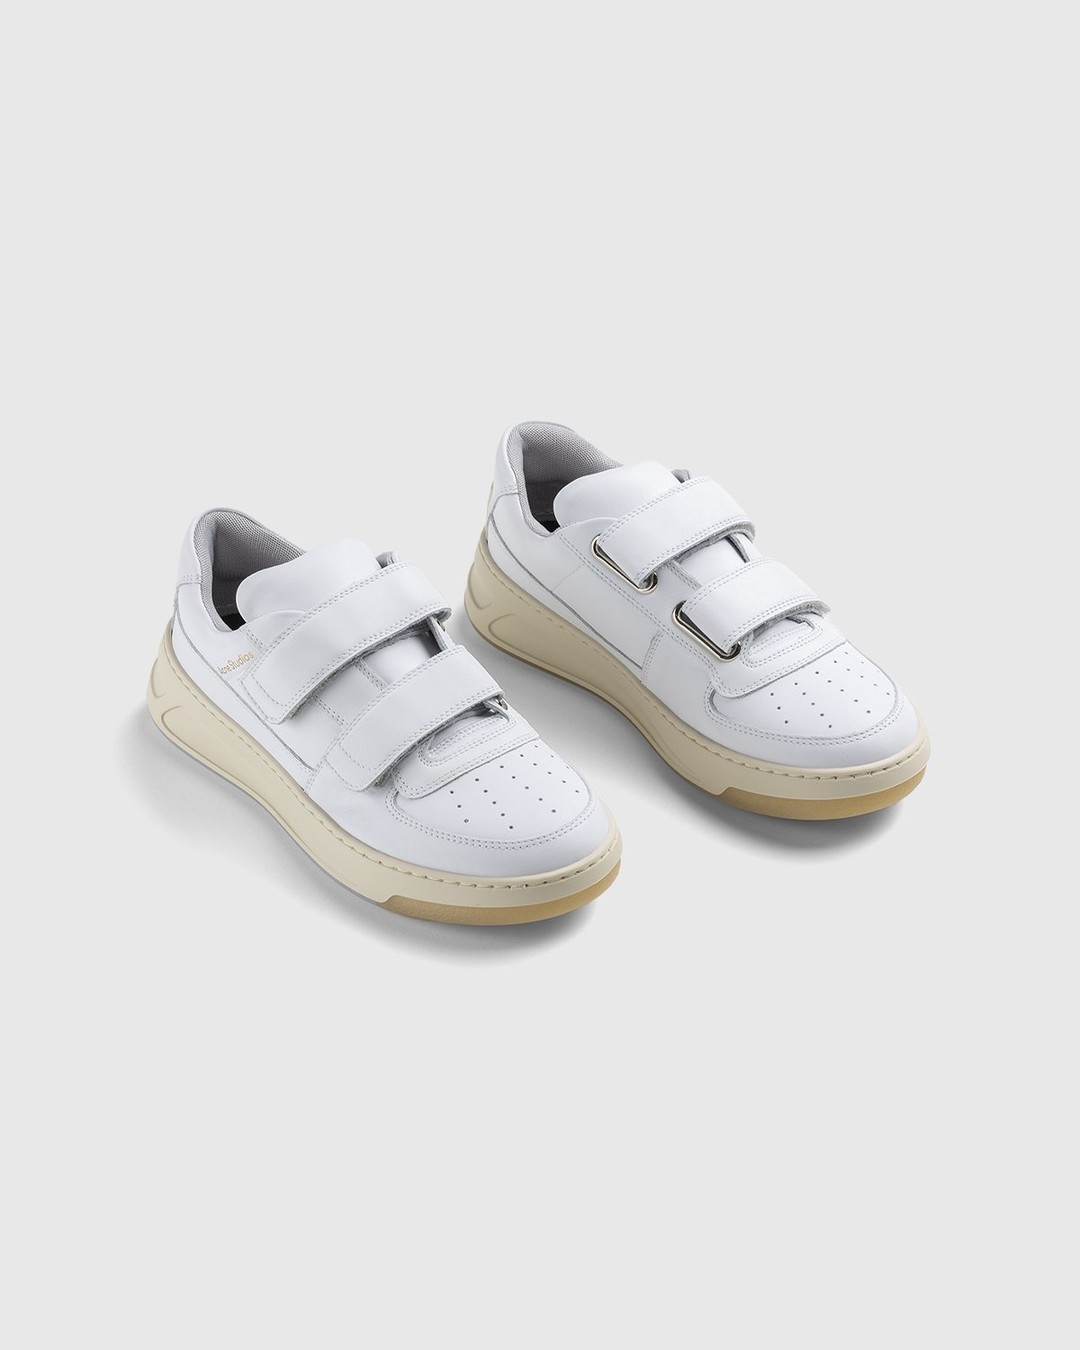 Acne Studios – Perey Velcro Strap Sneakers White - Sneakers - White - Image 3